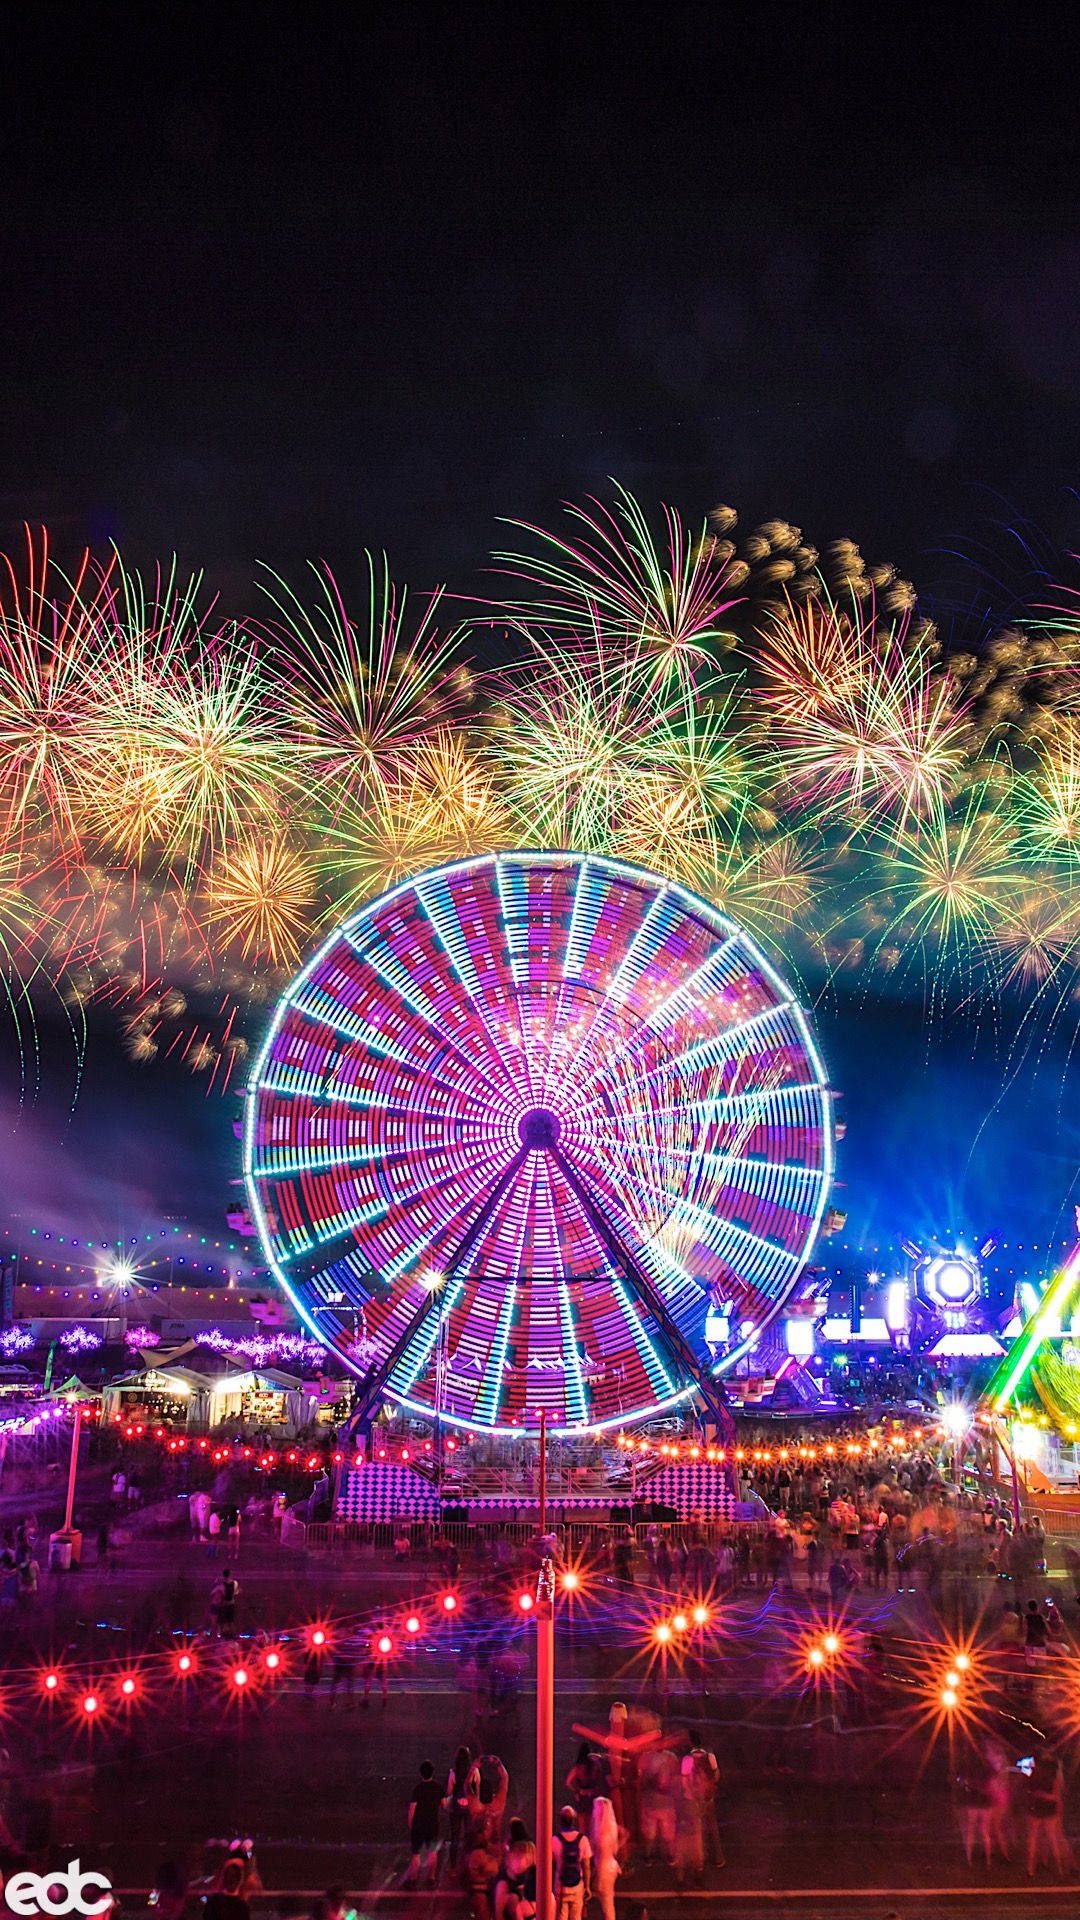 Caption: Mesmerizing View Of A Ferris Wheel In Las Vegas